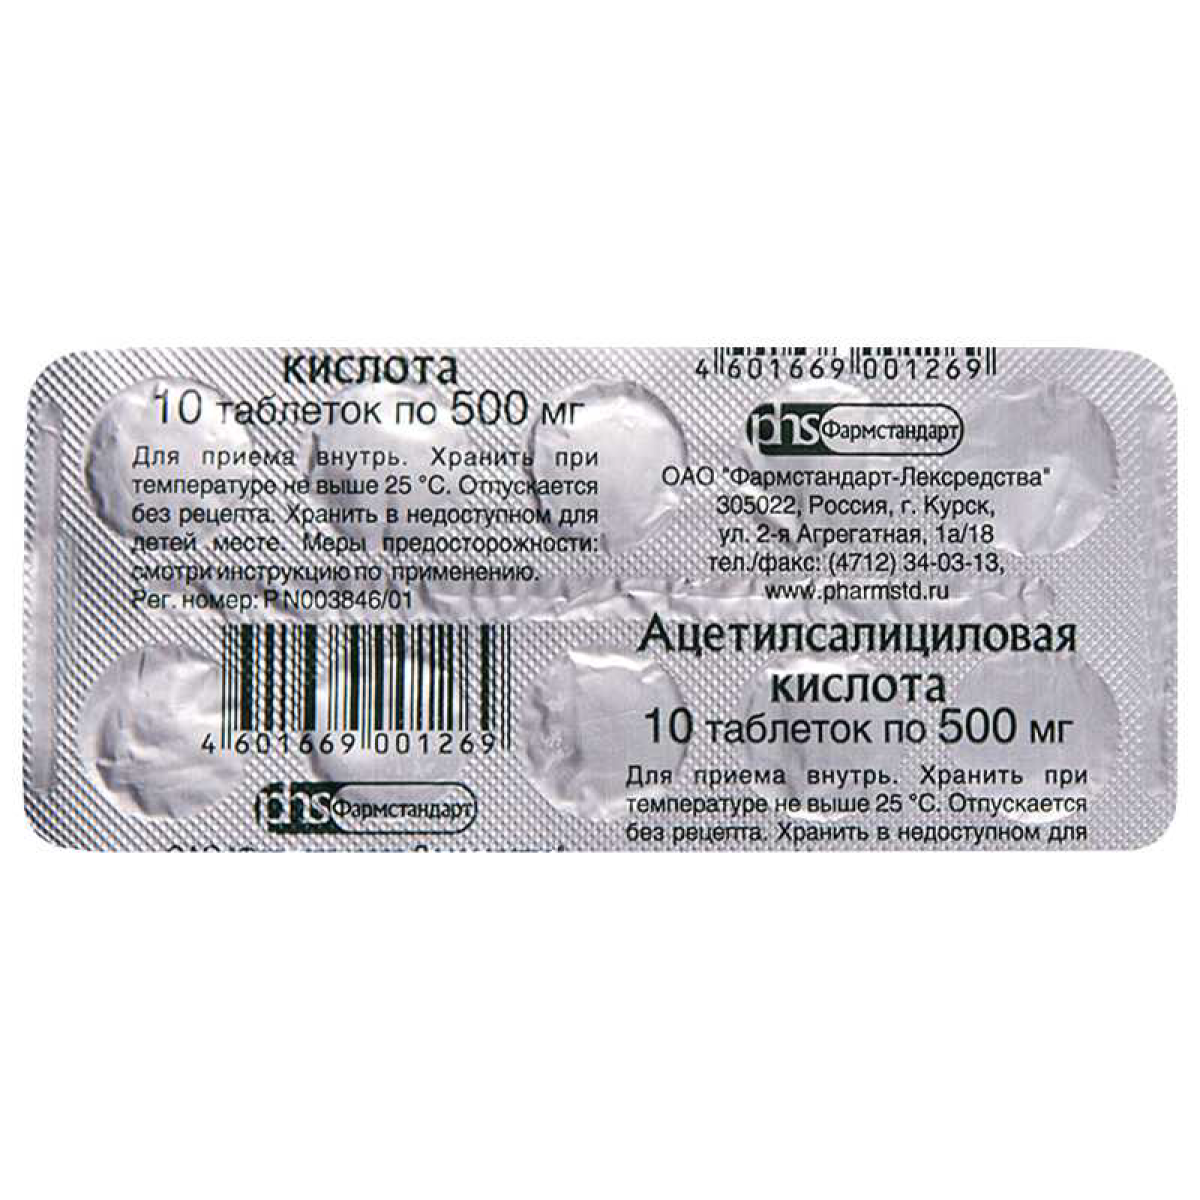 Ацетилсалициловая кислота, таблетки 500 мг, 10 шт.